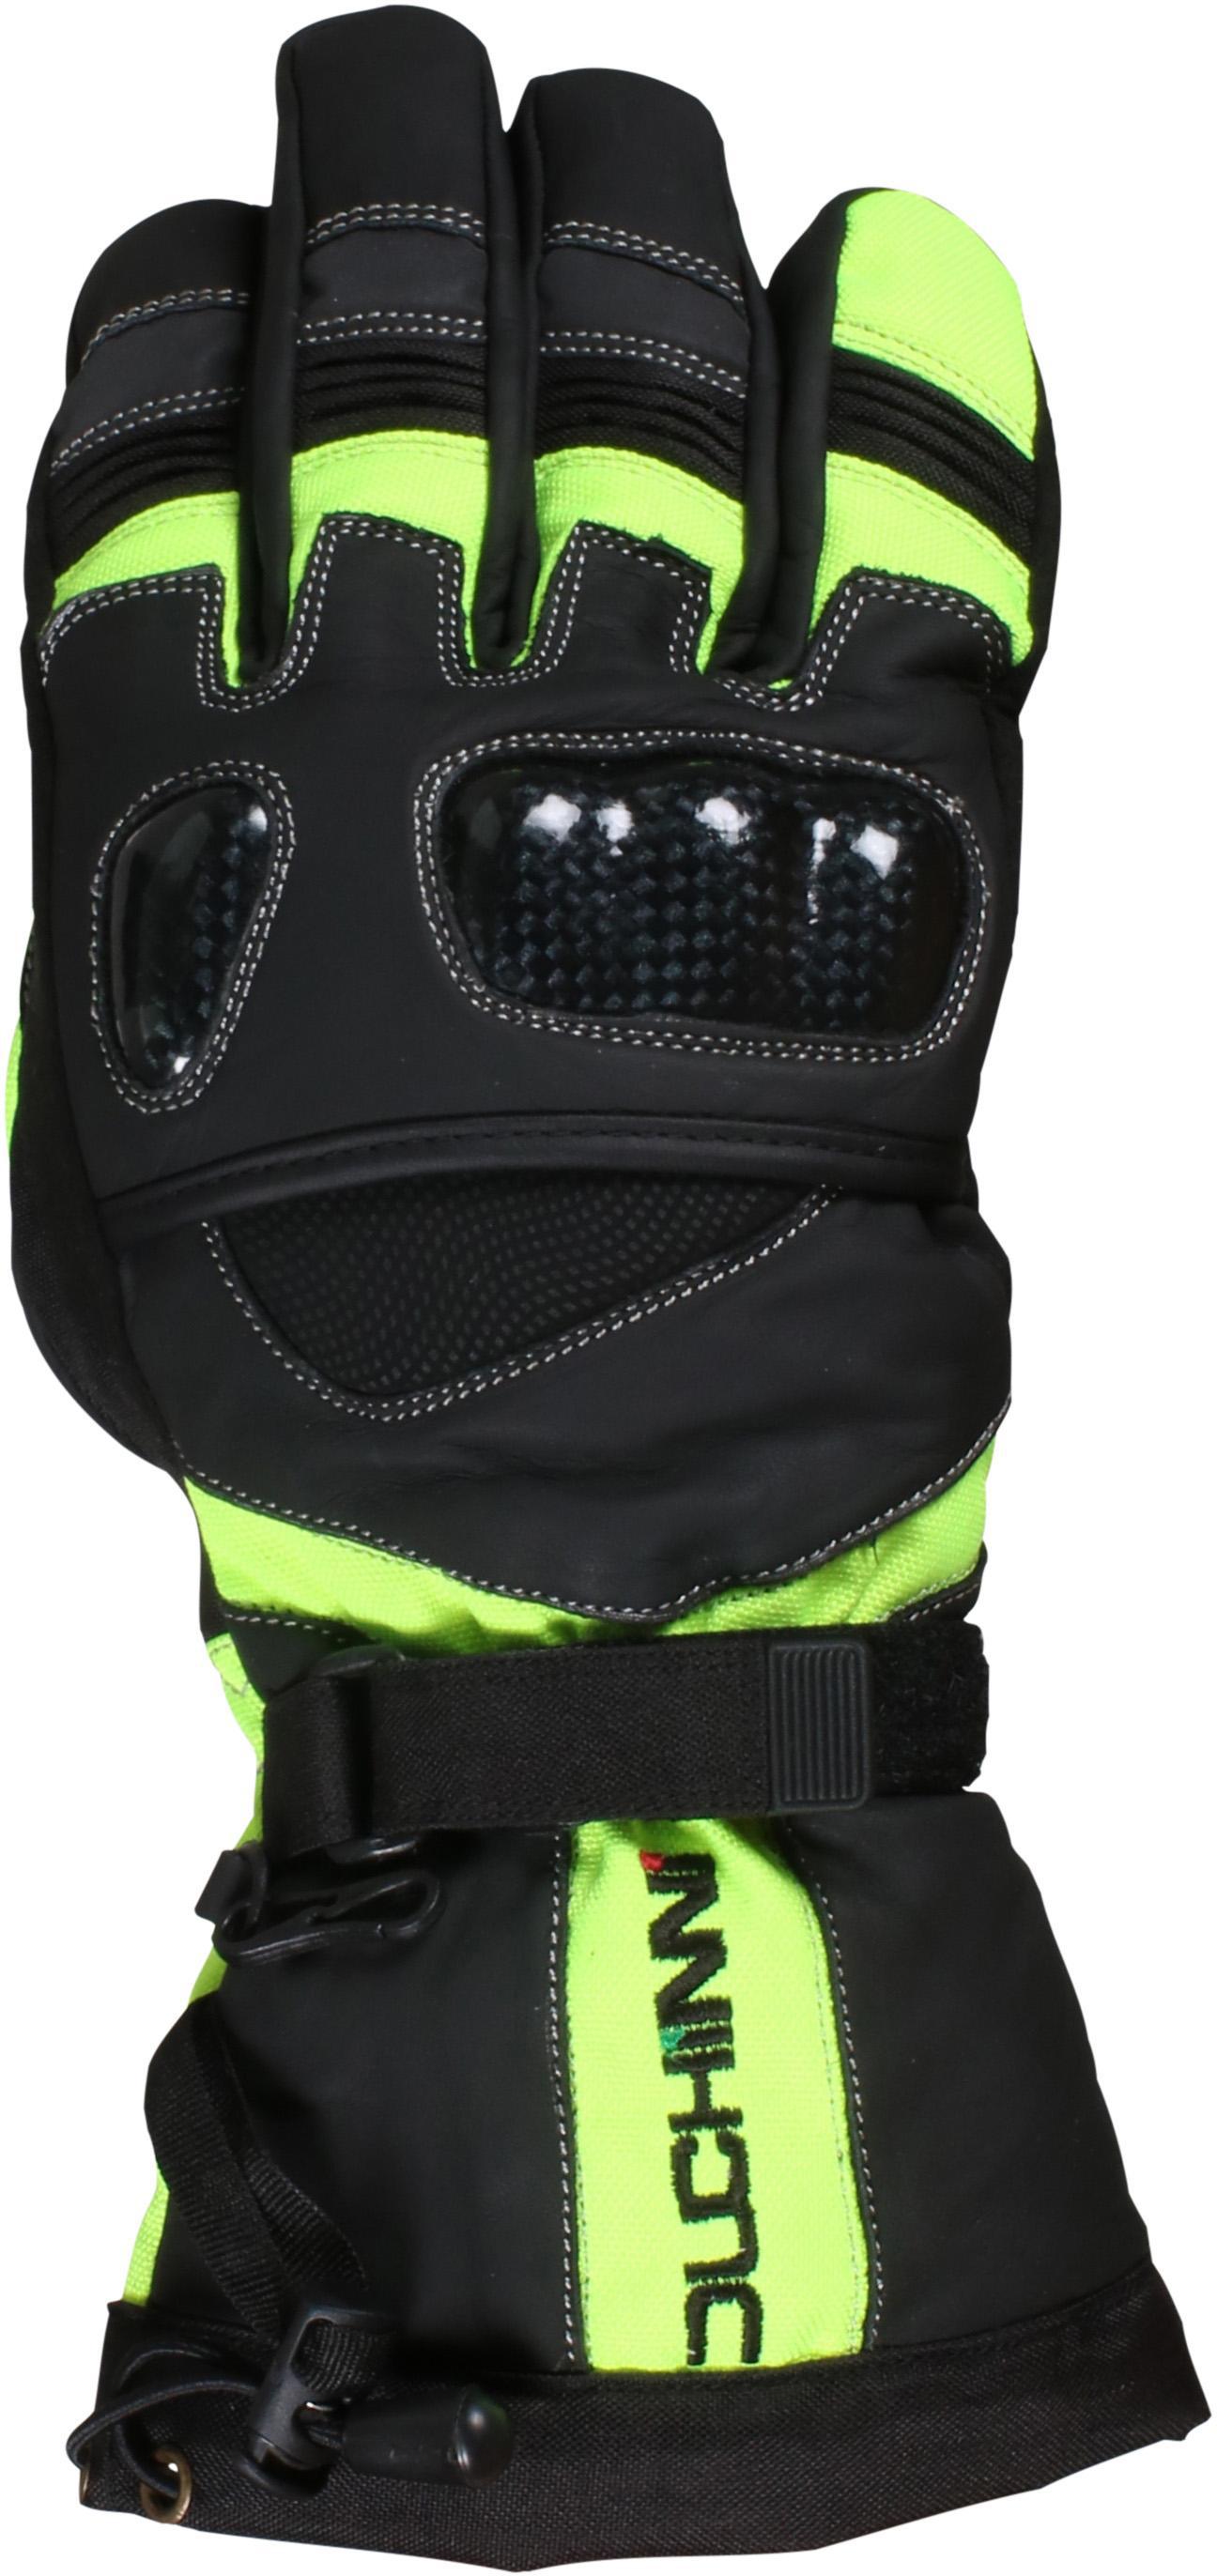 Duchinni Yukon Motorcycle Gloves - Black And Neon, S